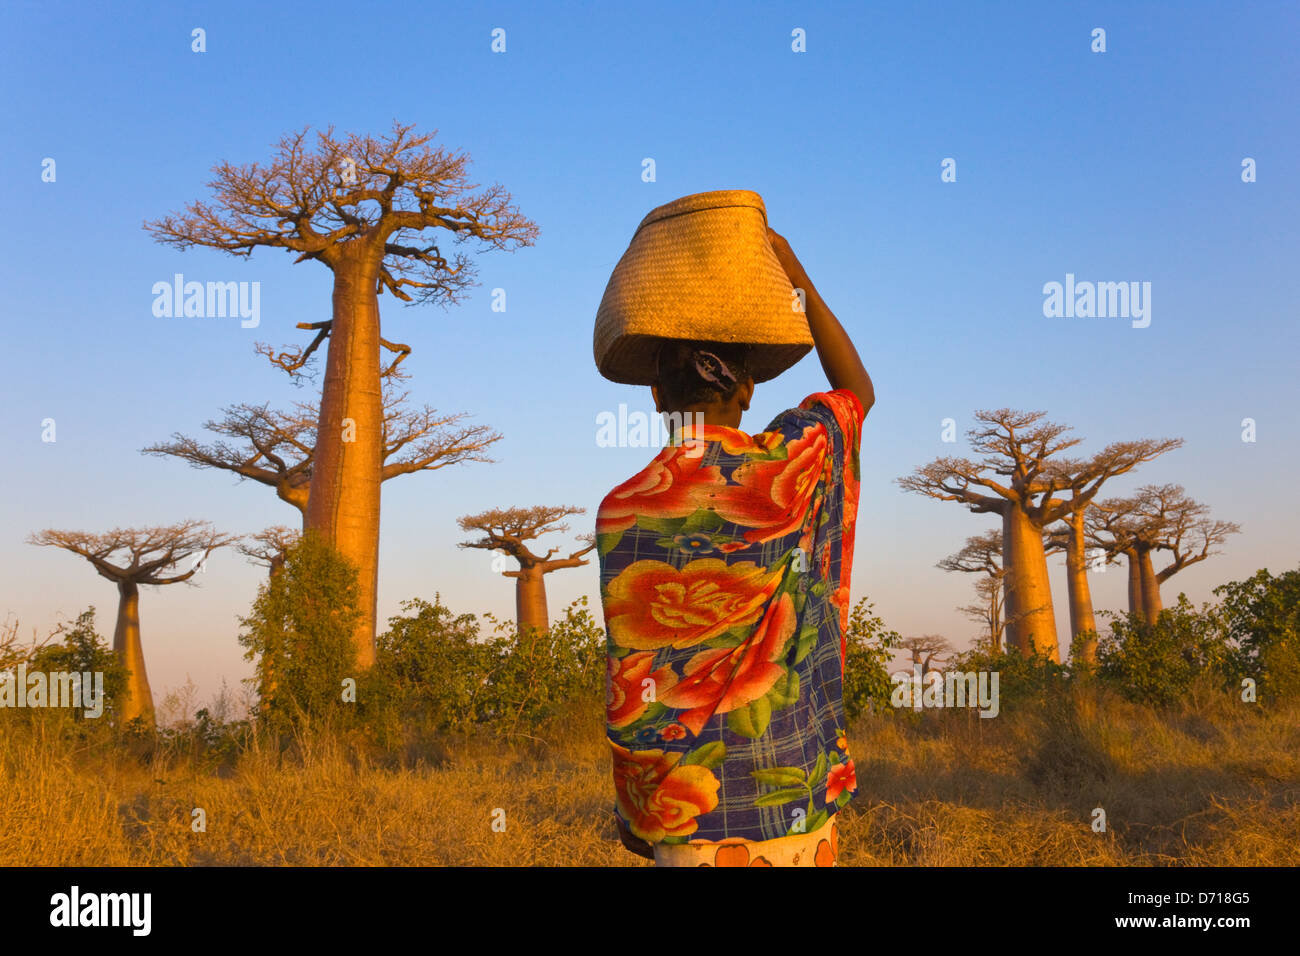 Girl carrying basket with Baobab tree (Adansonia), Morondava, Madagascar Stock Photo